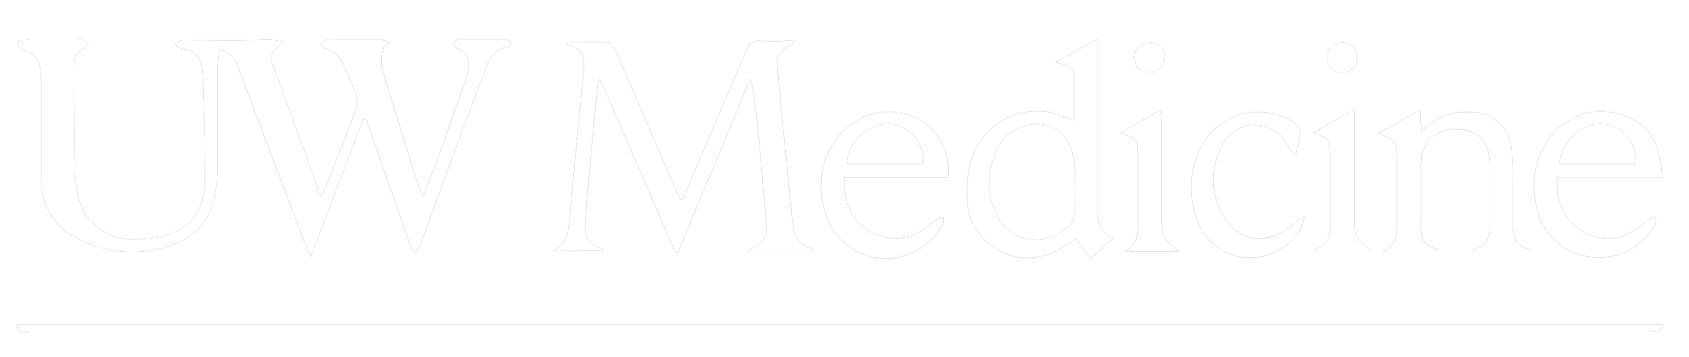 UW Medicine logo.